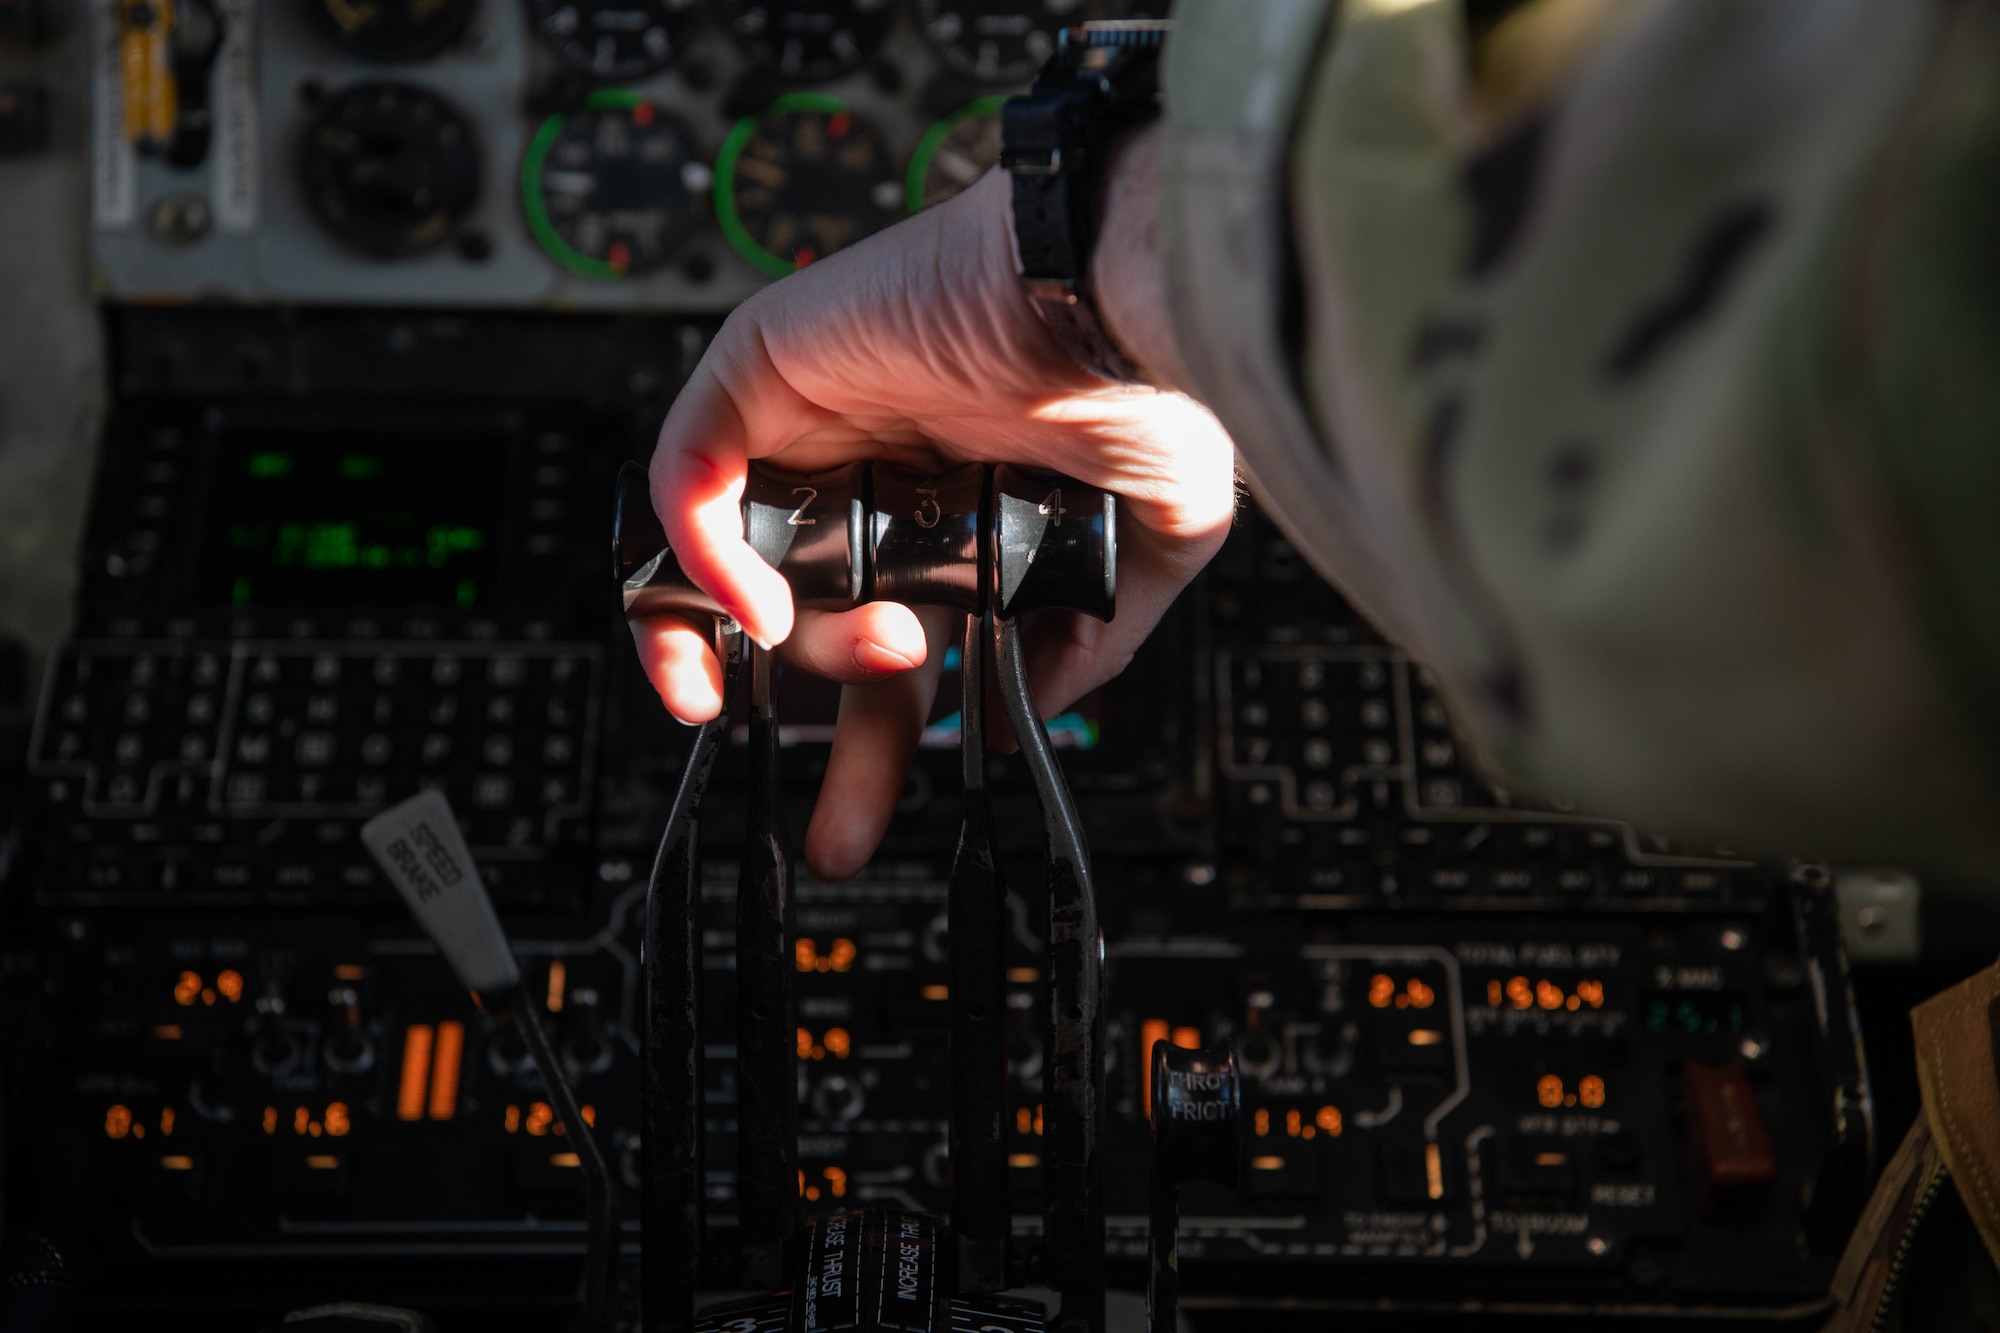 An Airman controls an aircraft's engines.